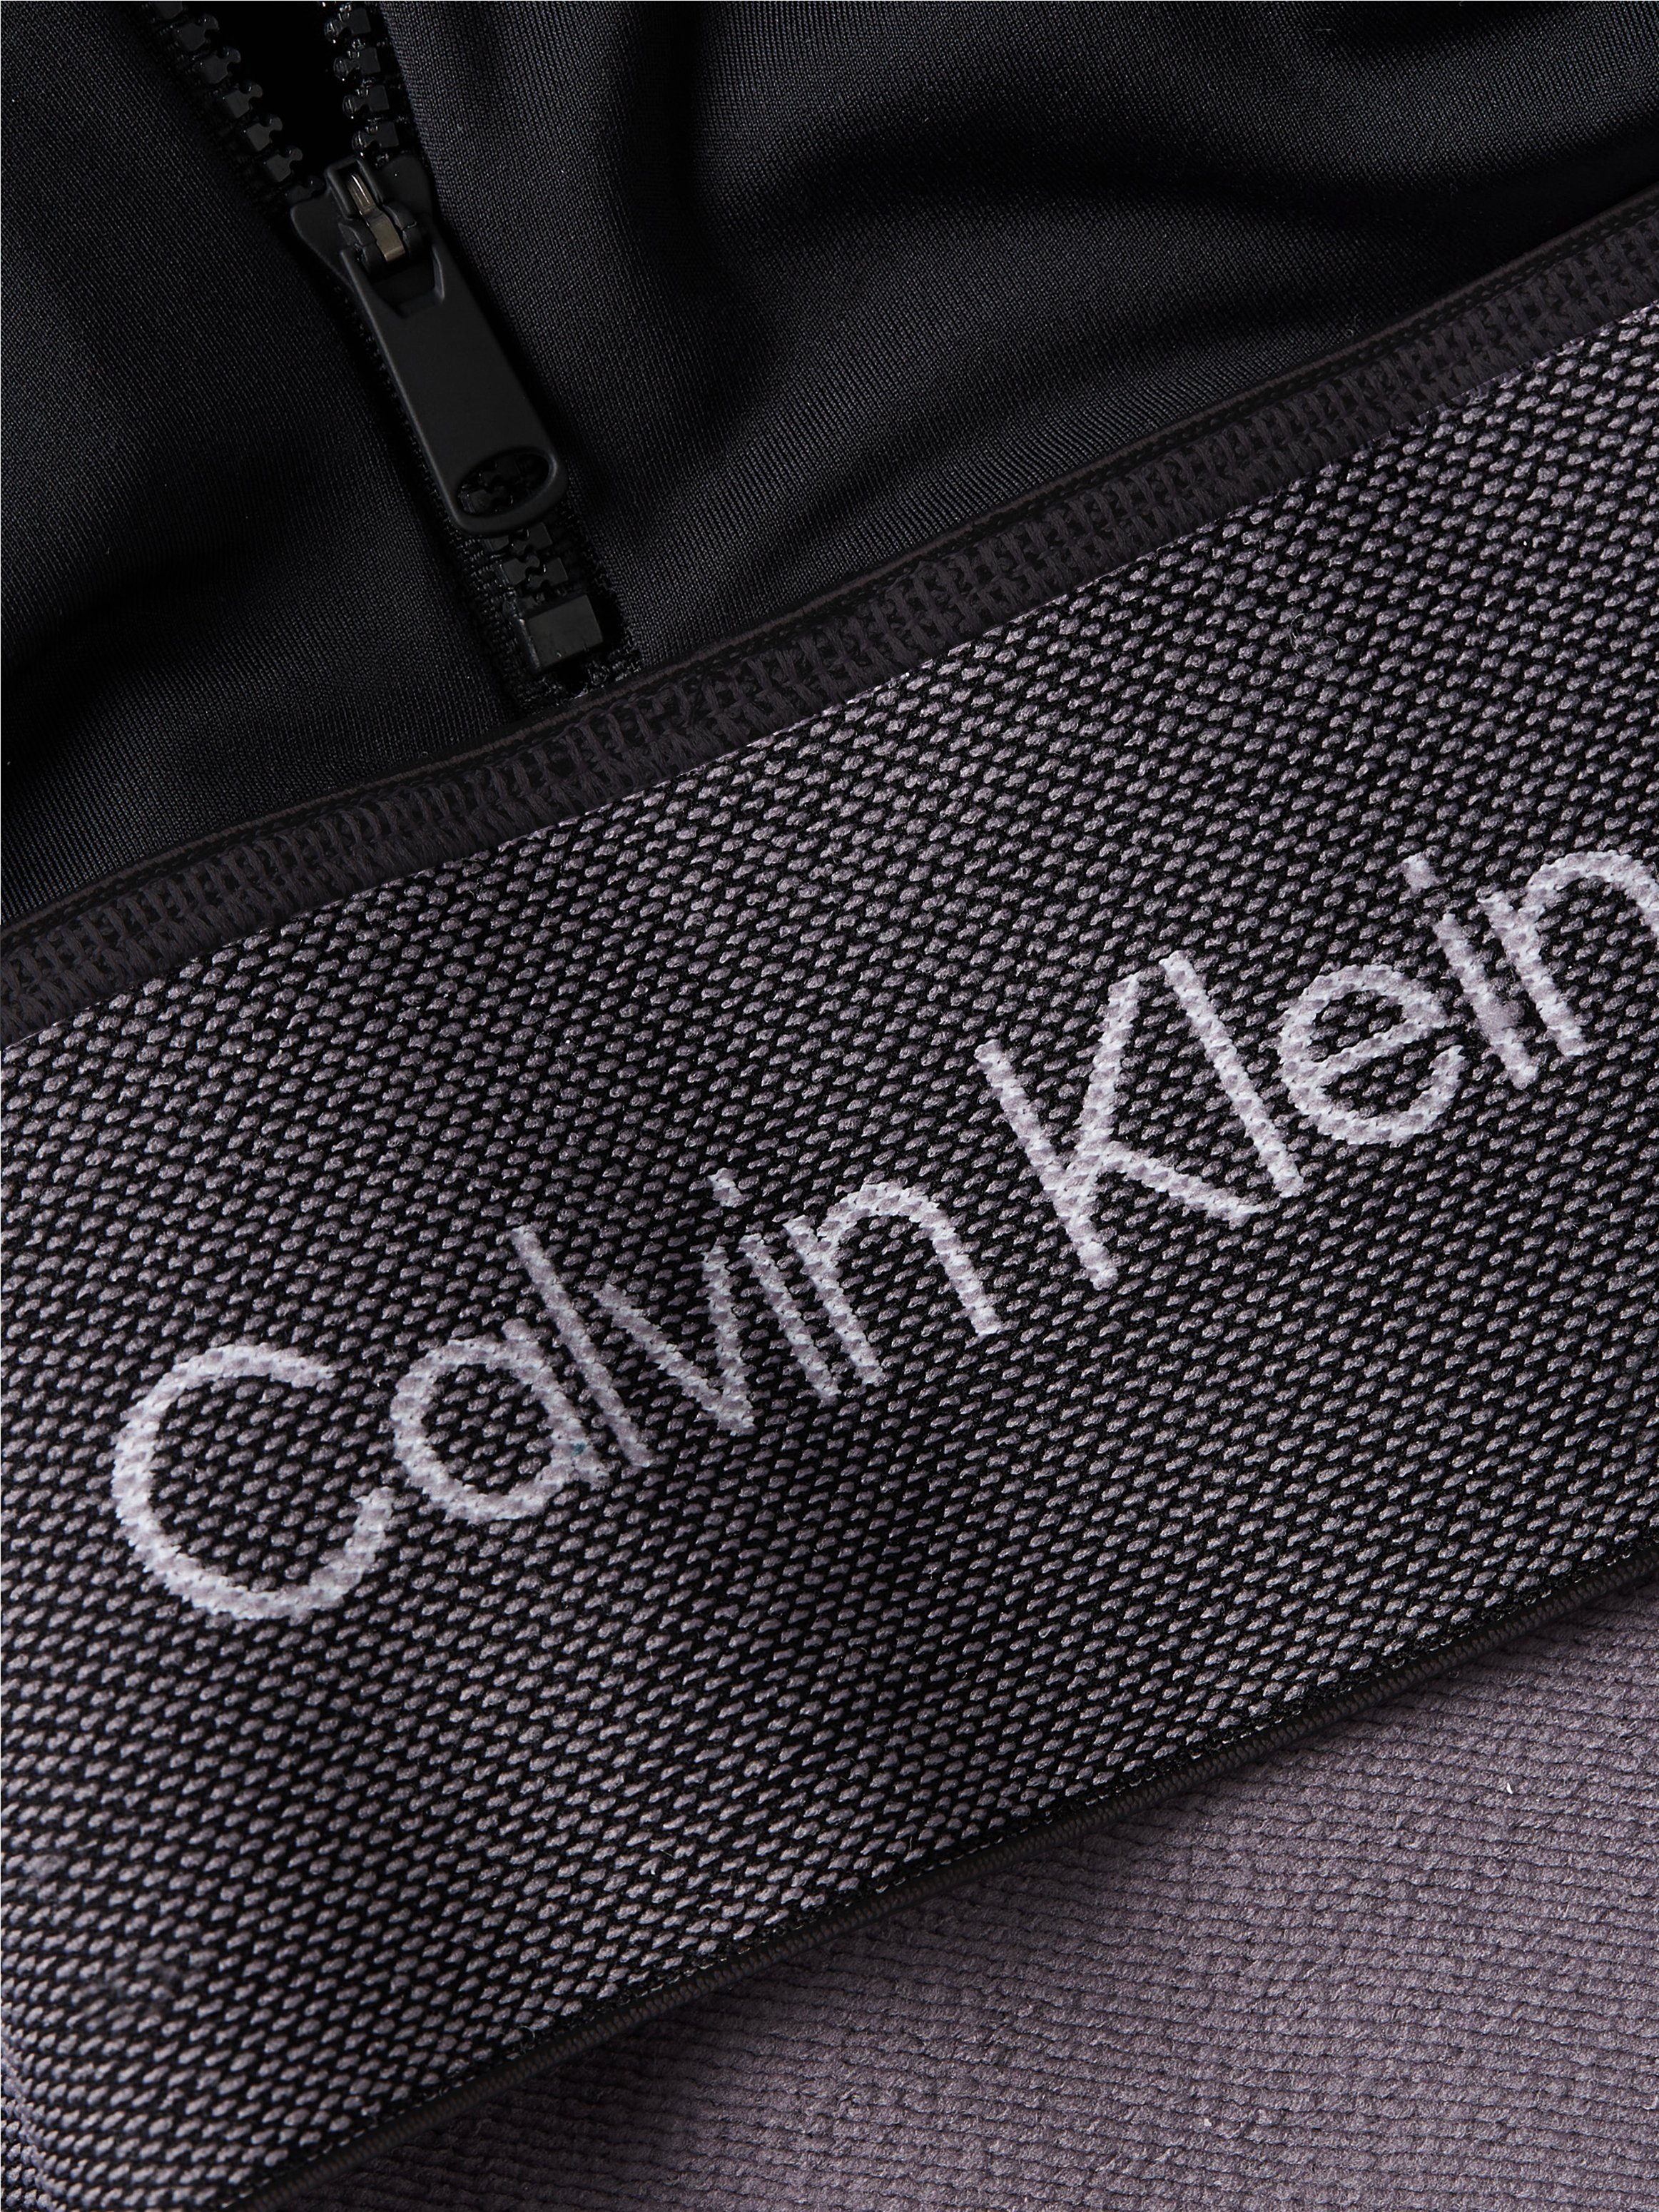 Calvin Klein Sport Sport-Bustier WO - Sports Bra Black Medium Support Beauty